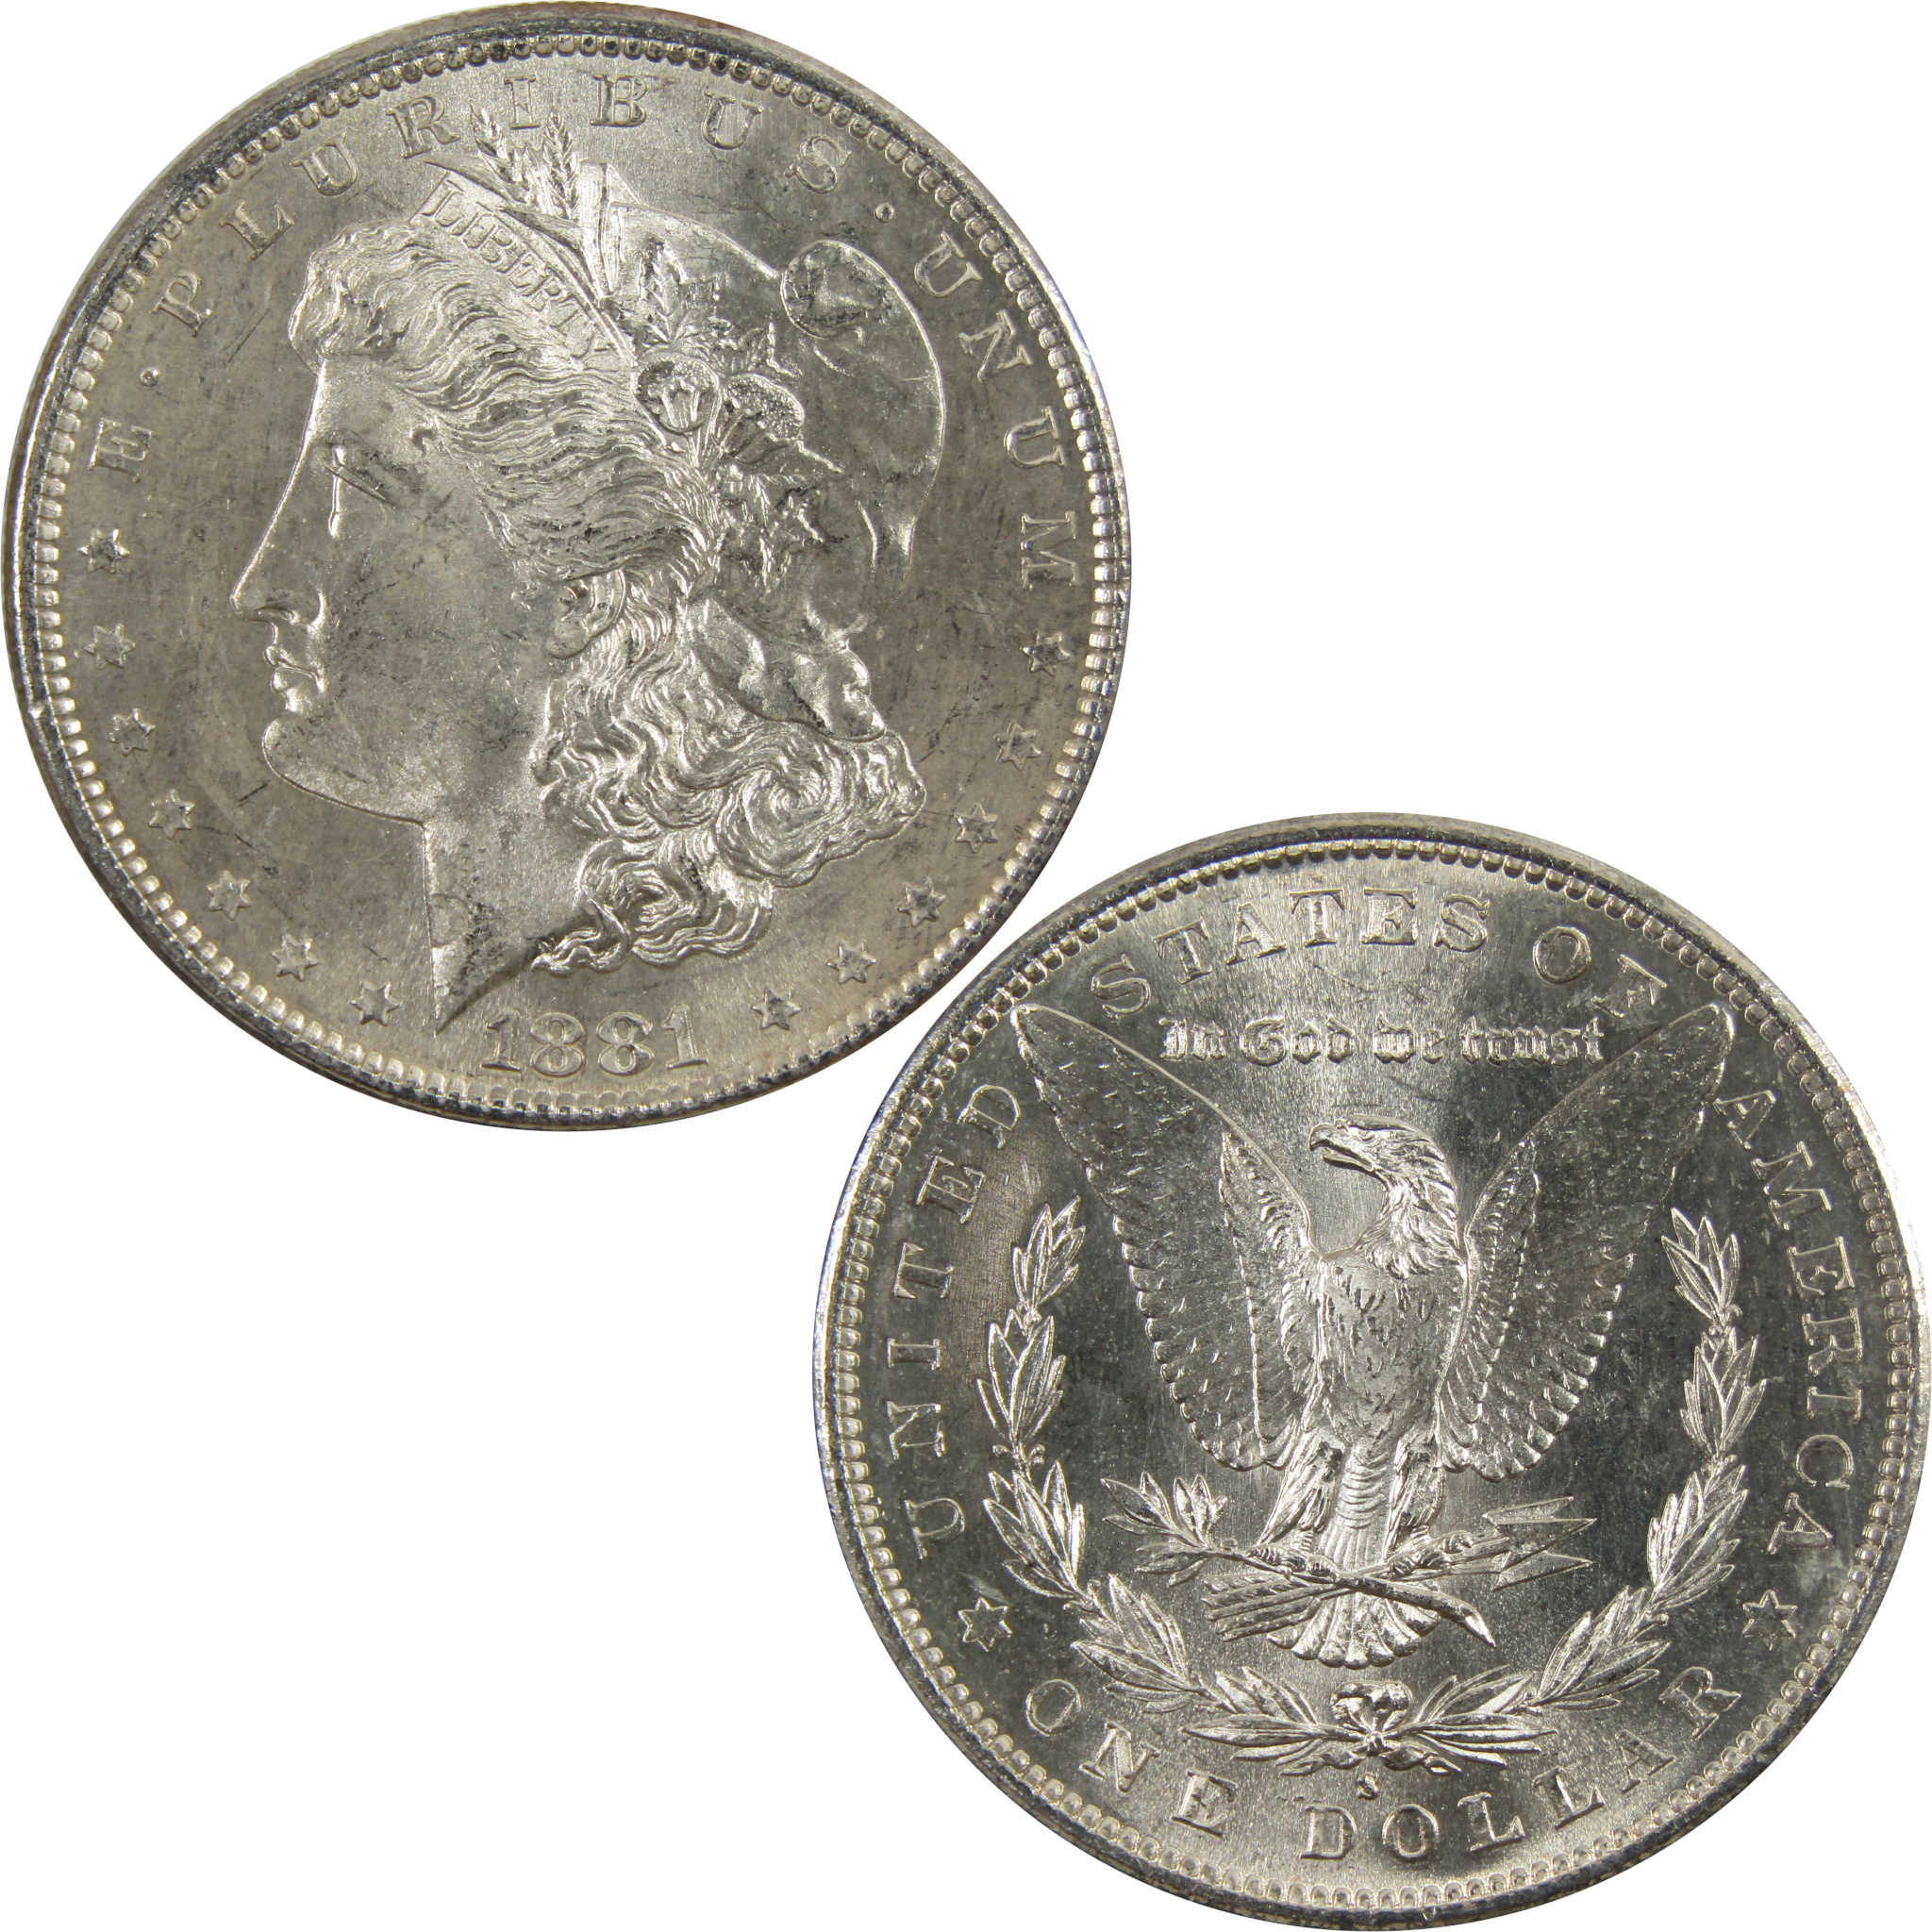 1881 S Morgan Dollar BU Uncirculated 90% Silver $1 Coin SKU:I5307 - Morgan coin - Morgan silver dollar - Morgan silver dollar for sale - Profile Coins &amp; Collectibles